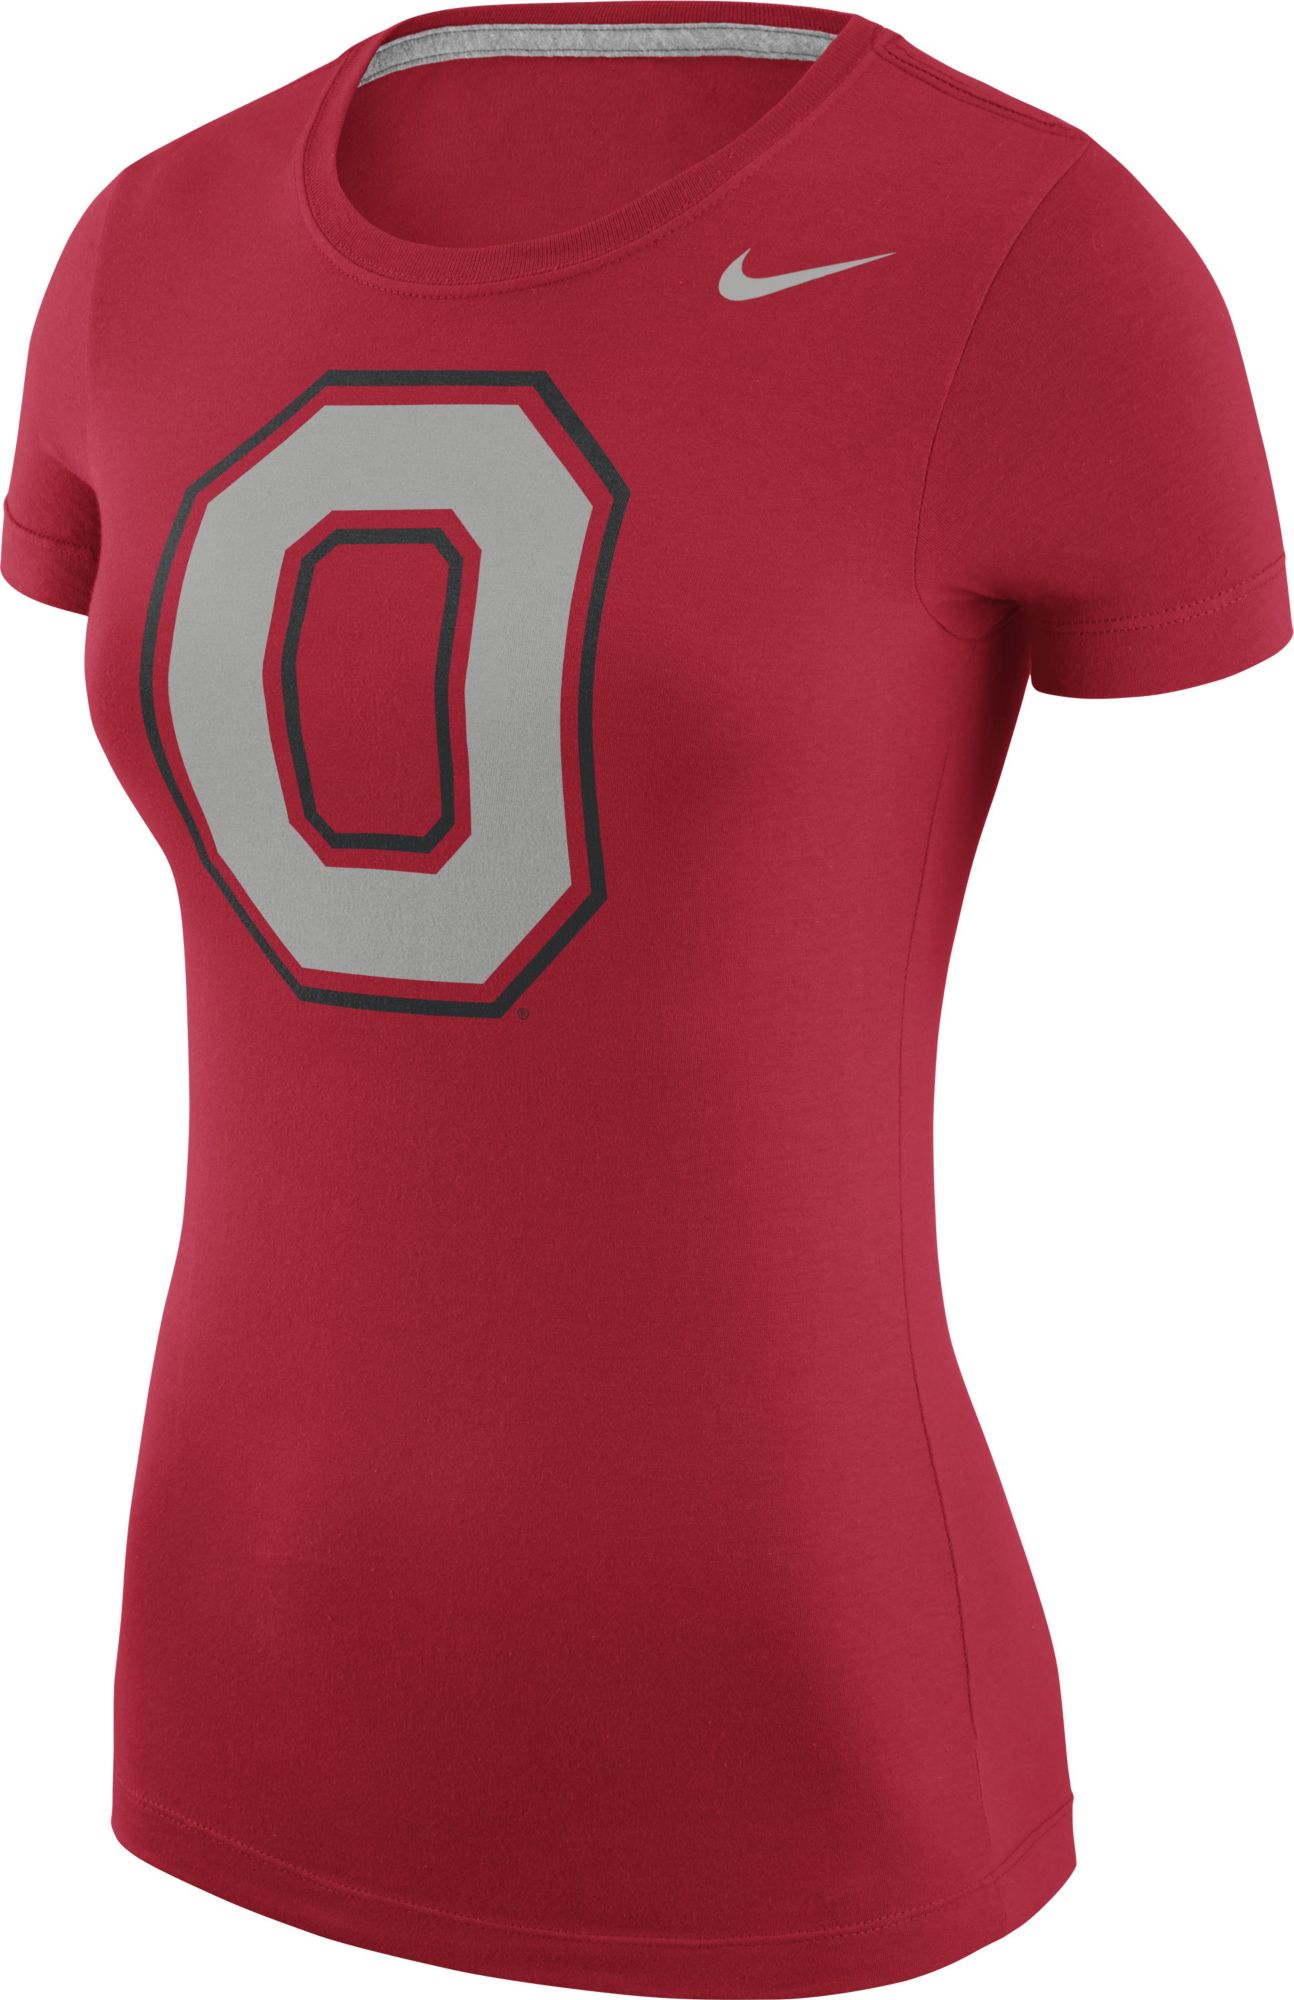 Ohio State Buckeyes Women's Apparel | DICK'S Sporting Goods